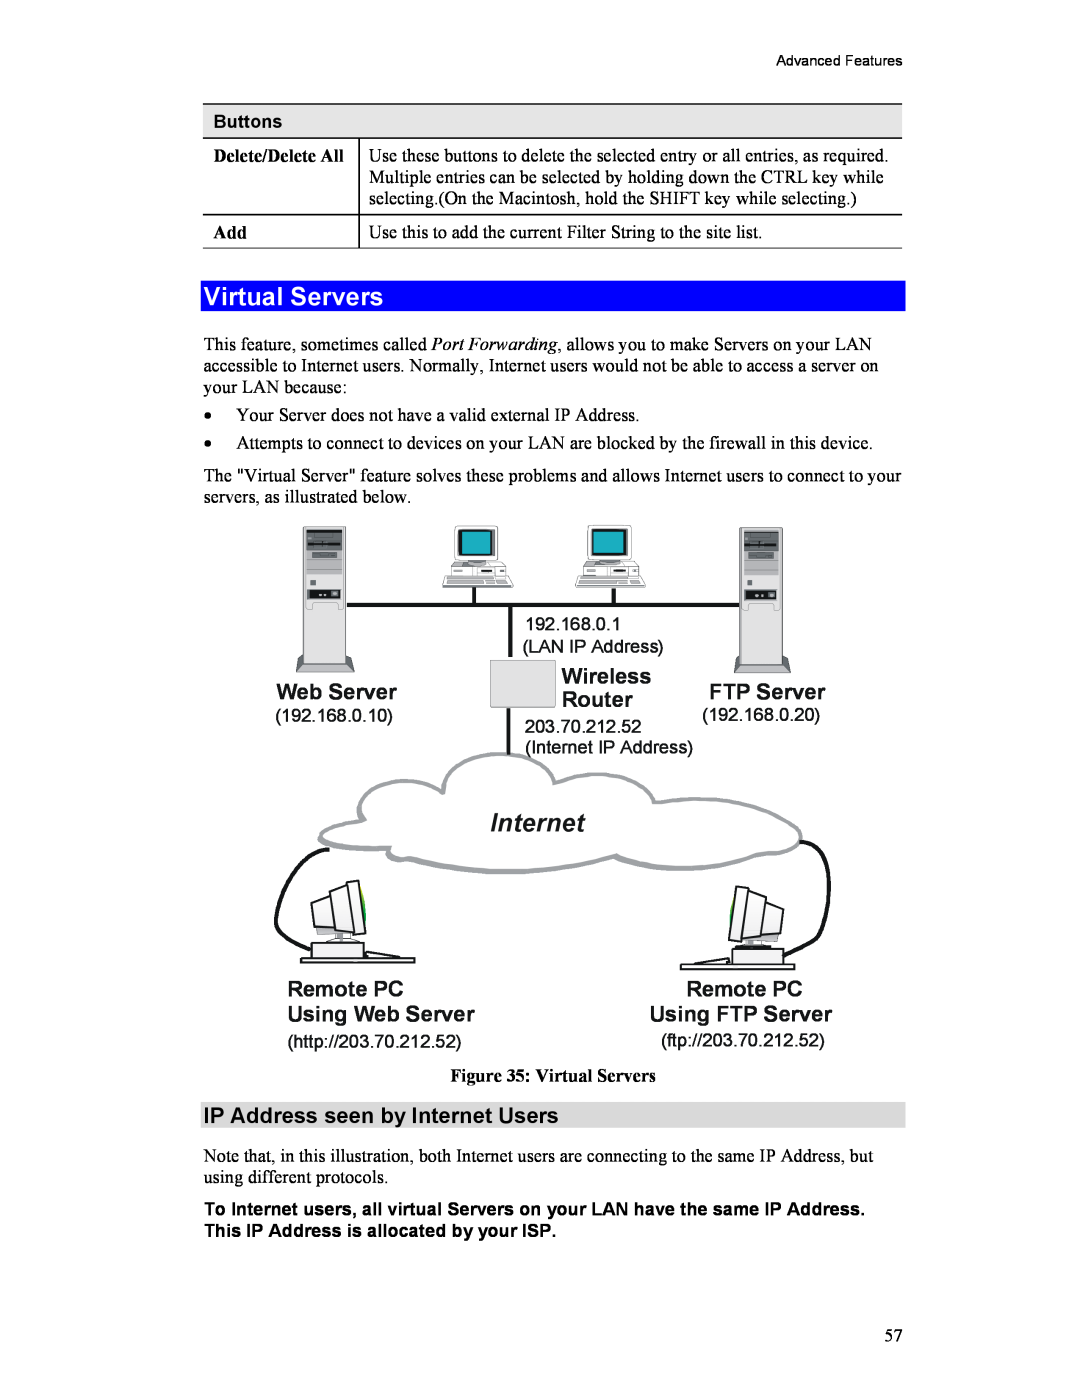 Hawking Technology HWR54G Virtual Servers, IP Address seen by Internet Users, Web Server, Wireless, FTP Server, Router 